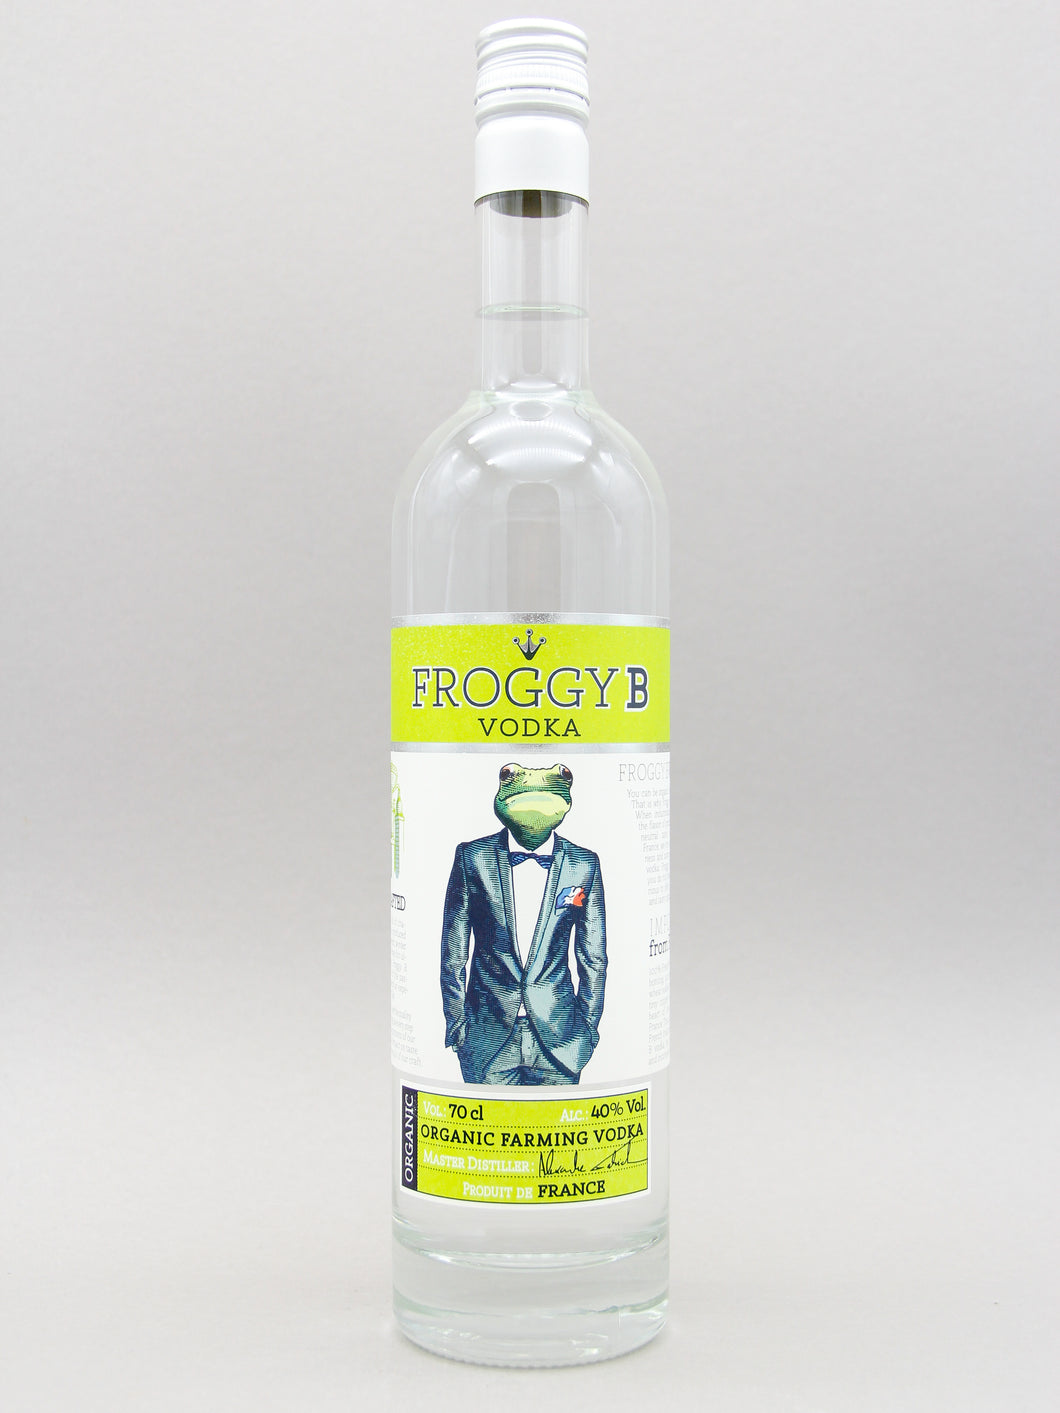 Froggy B Vodka, Organic, France (40%, 70cl)